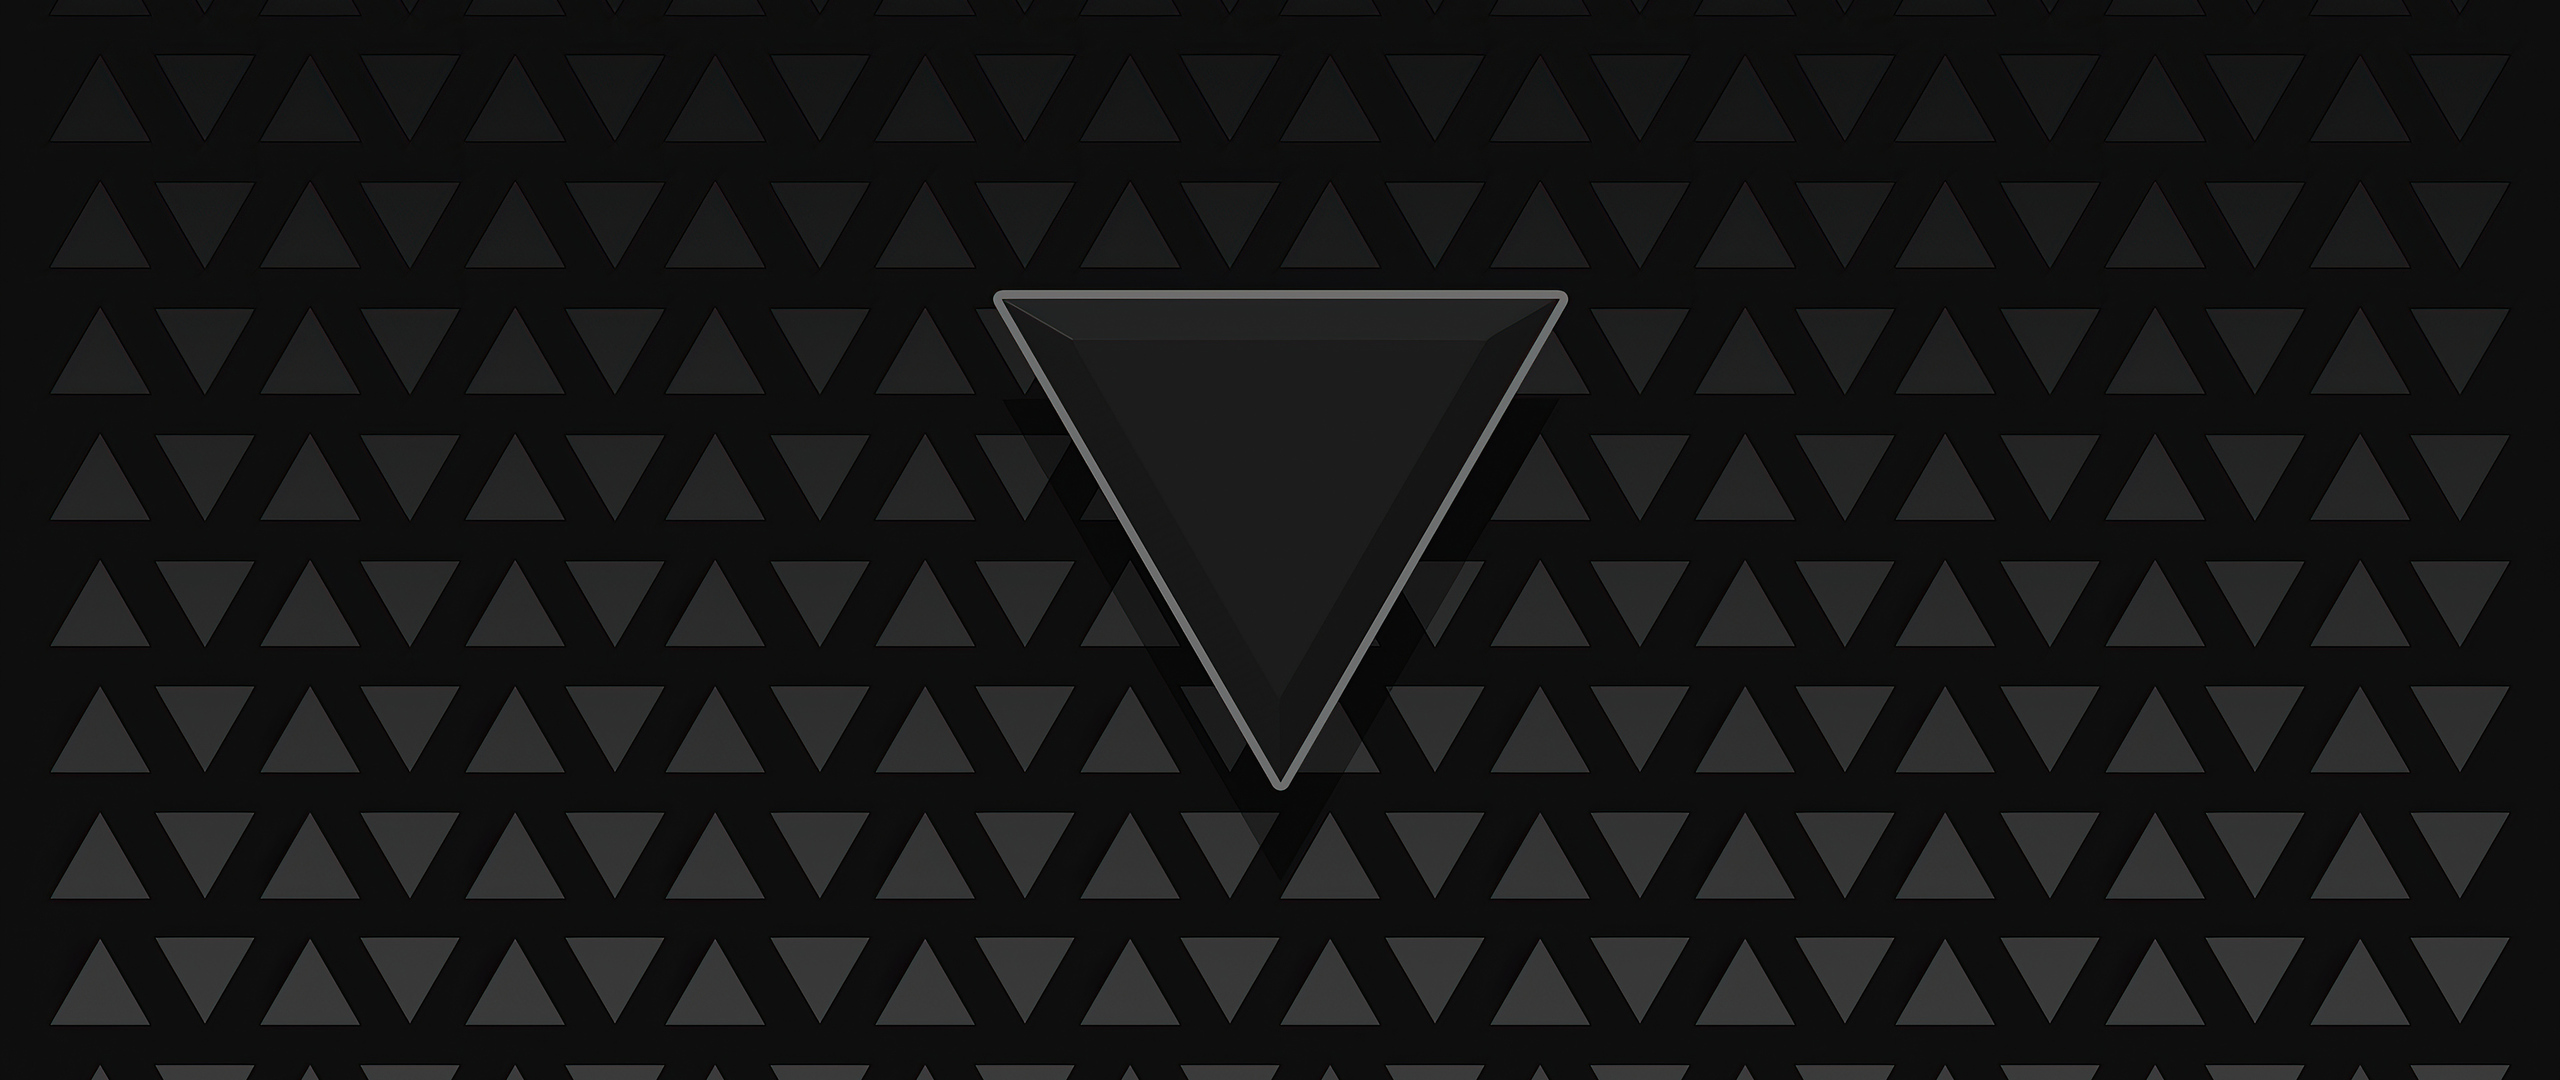 triangle-dark-black-4k-31-2560x1080.jpg